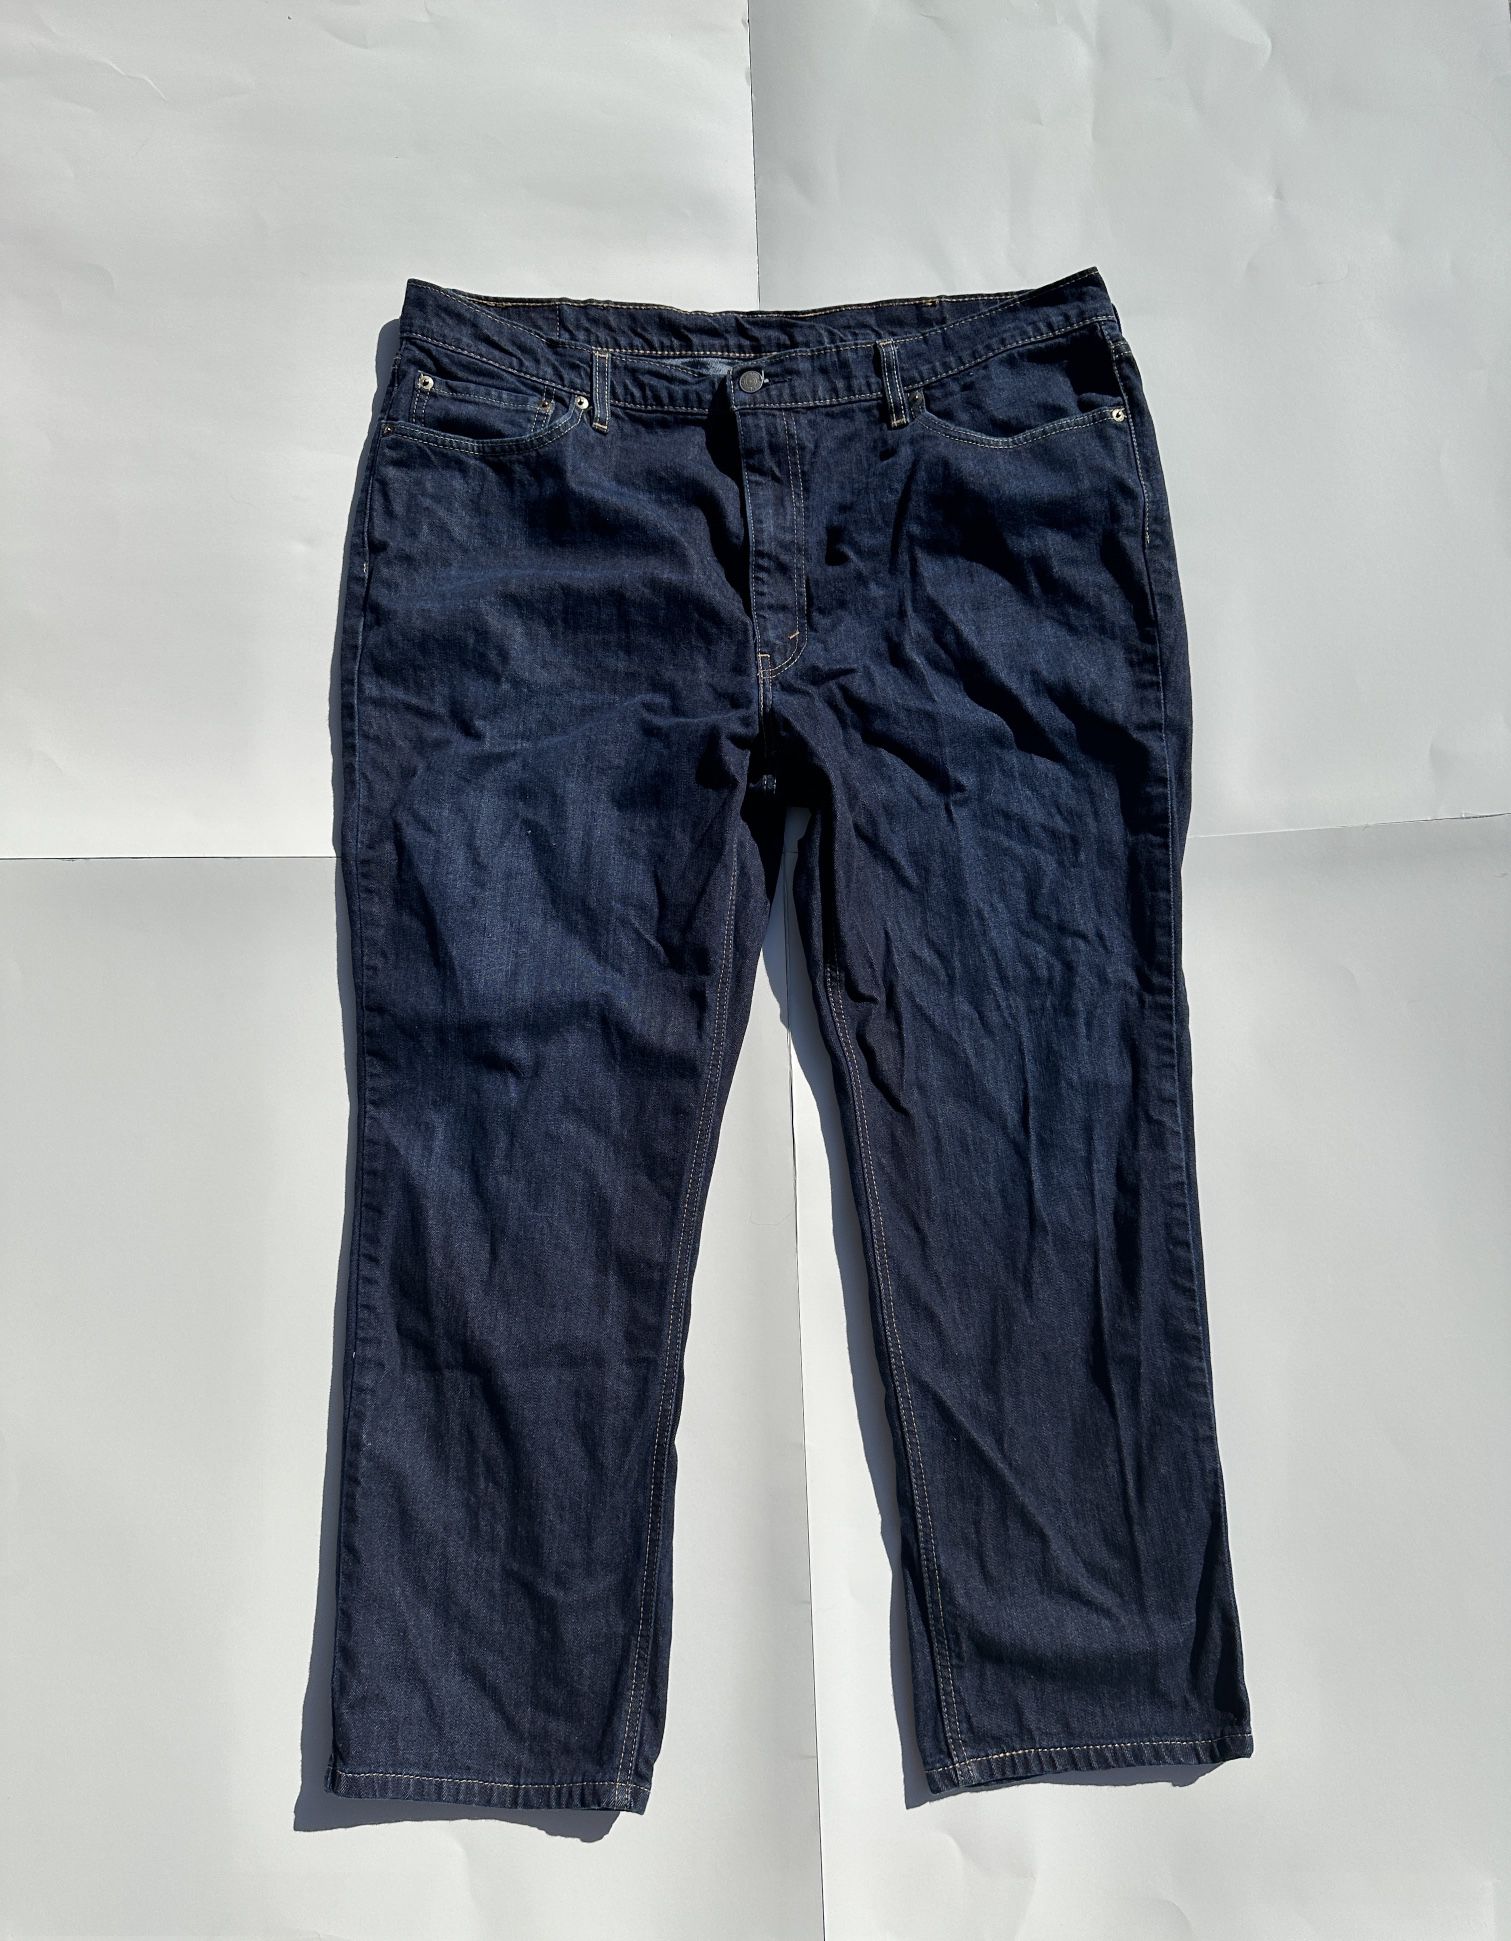 Vintage Levi’s 541 Dark Blue Jeans